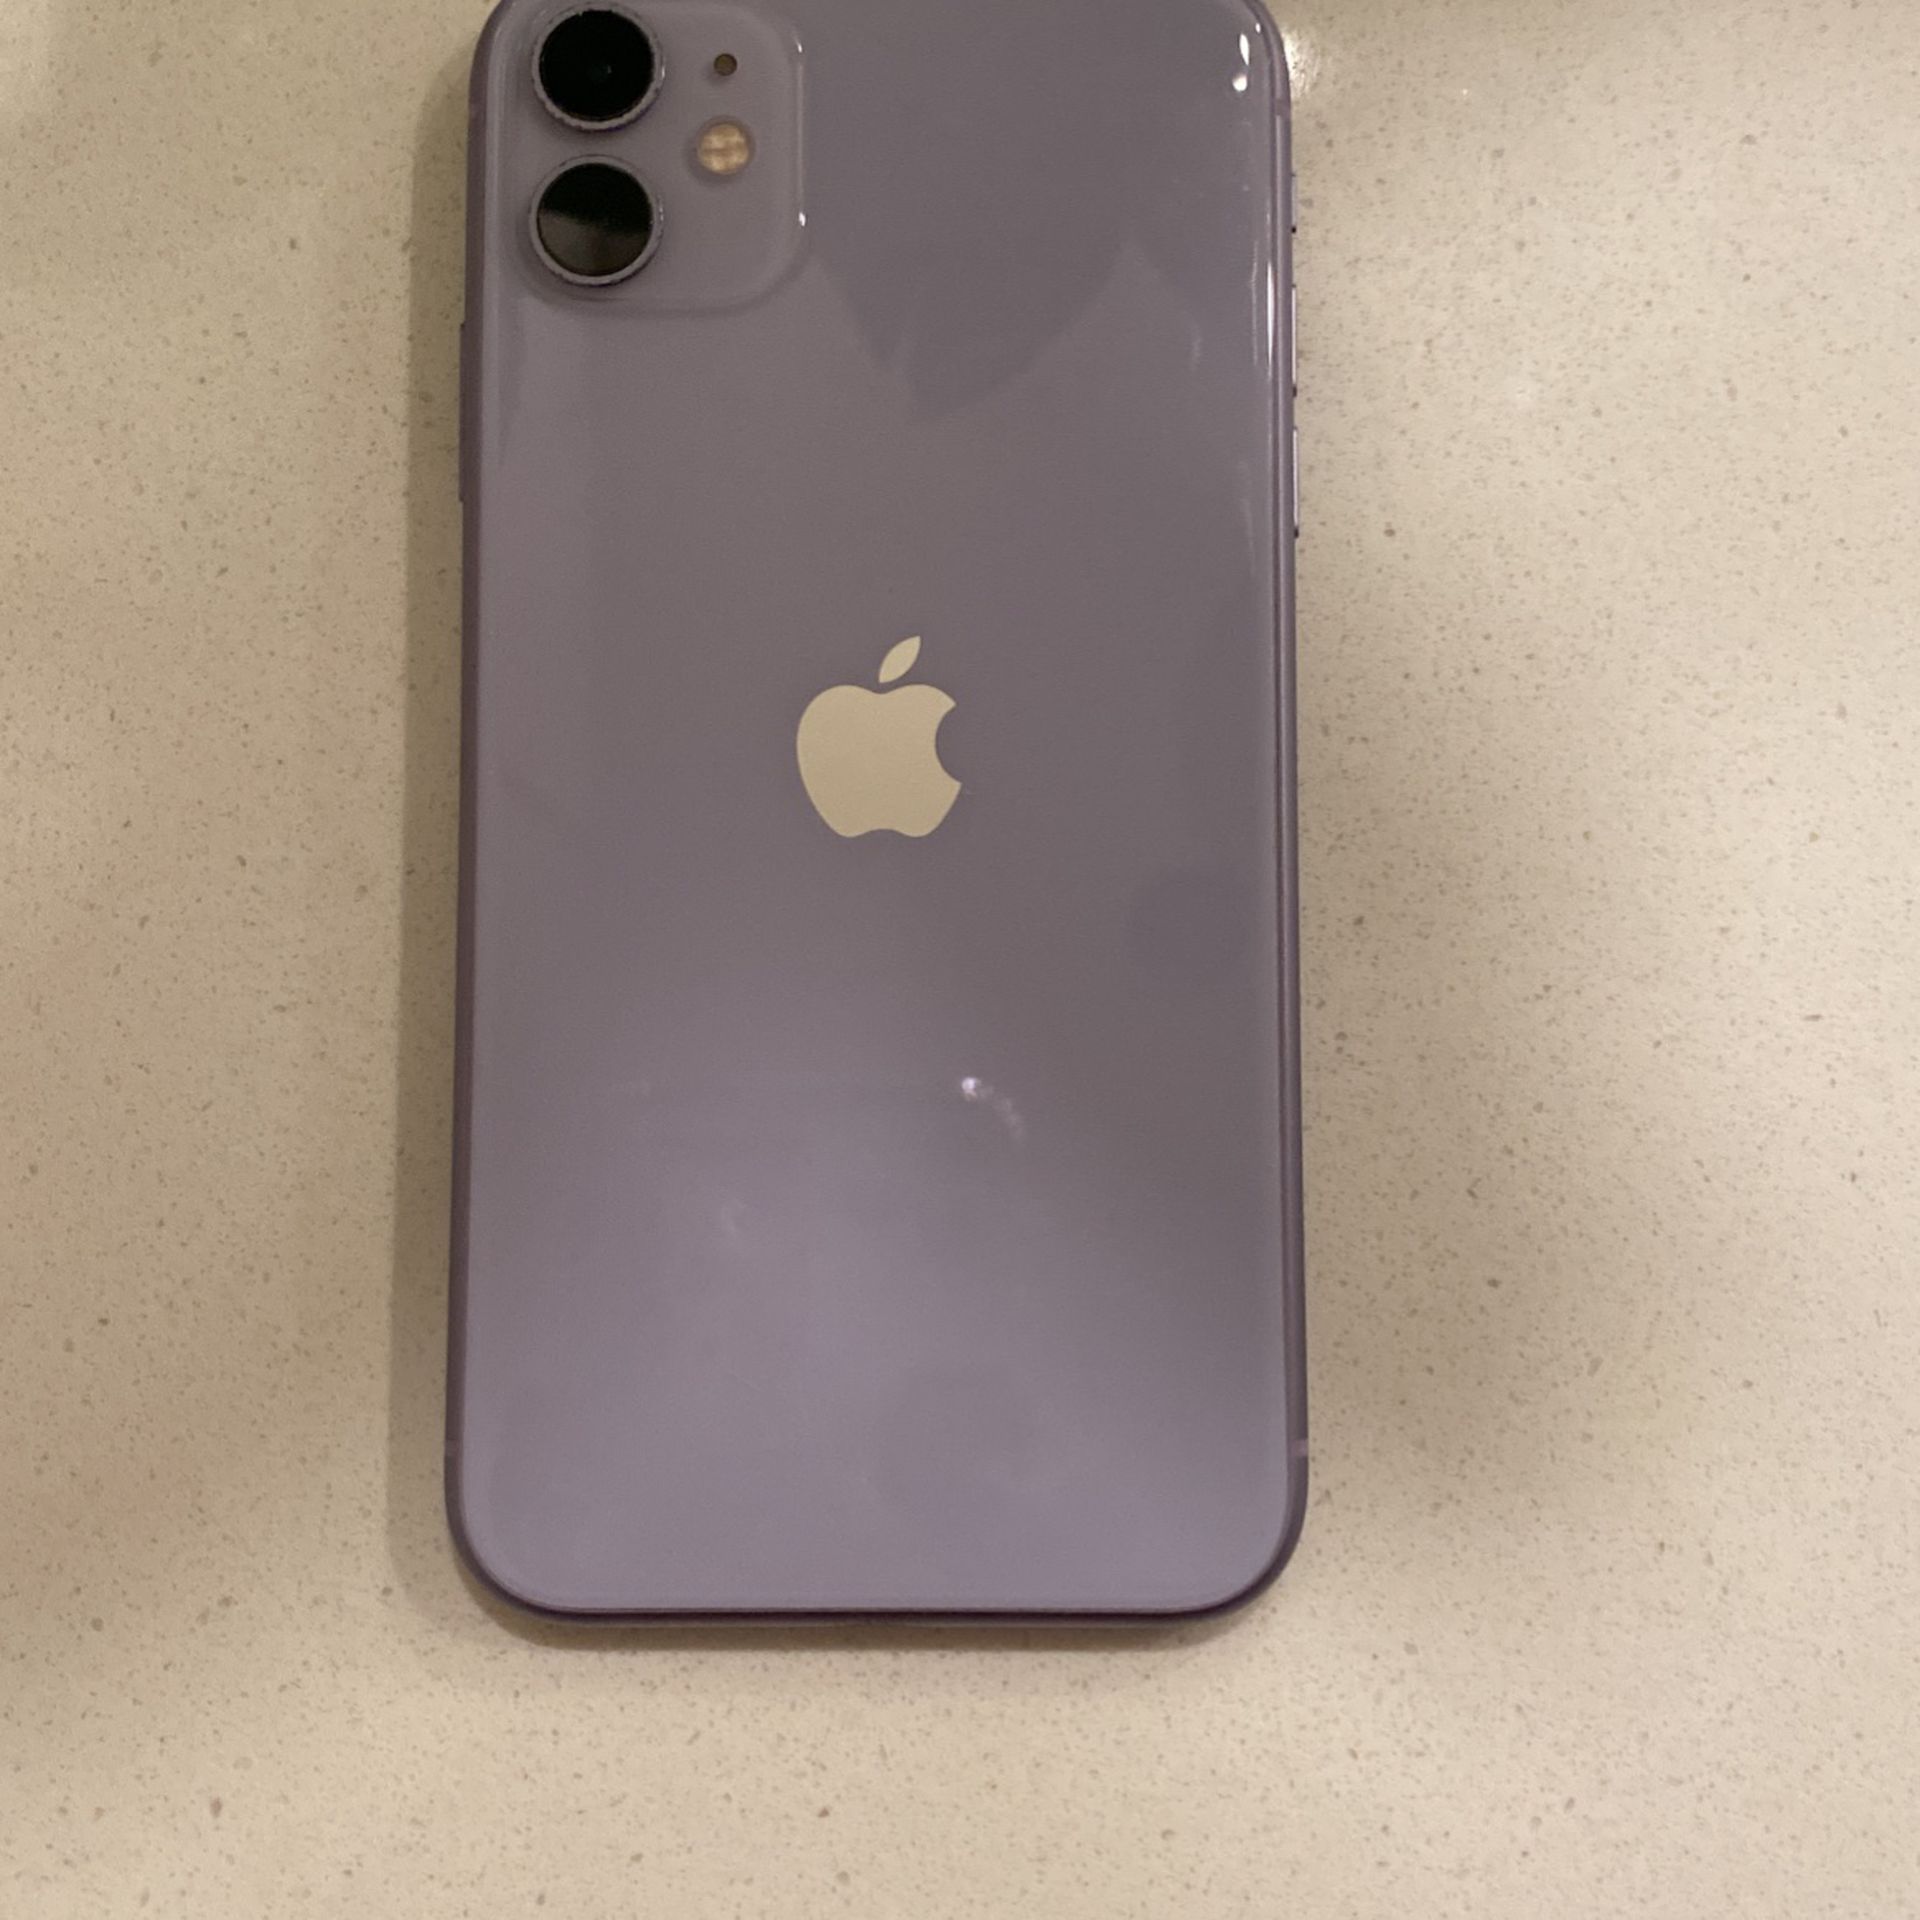 NEED GONE ASAP Purple IPhone 11 UNLOCKED